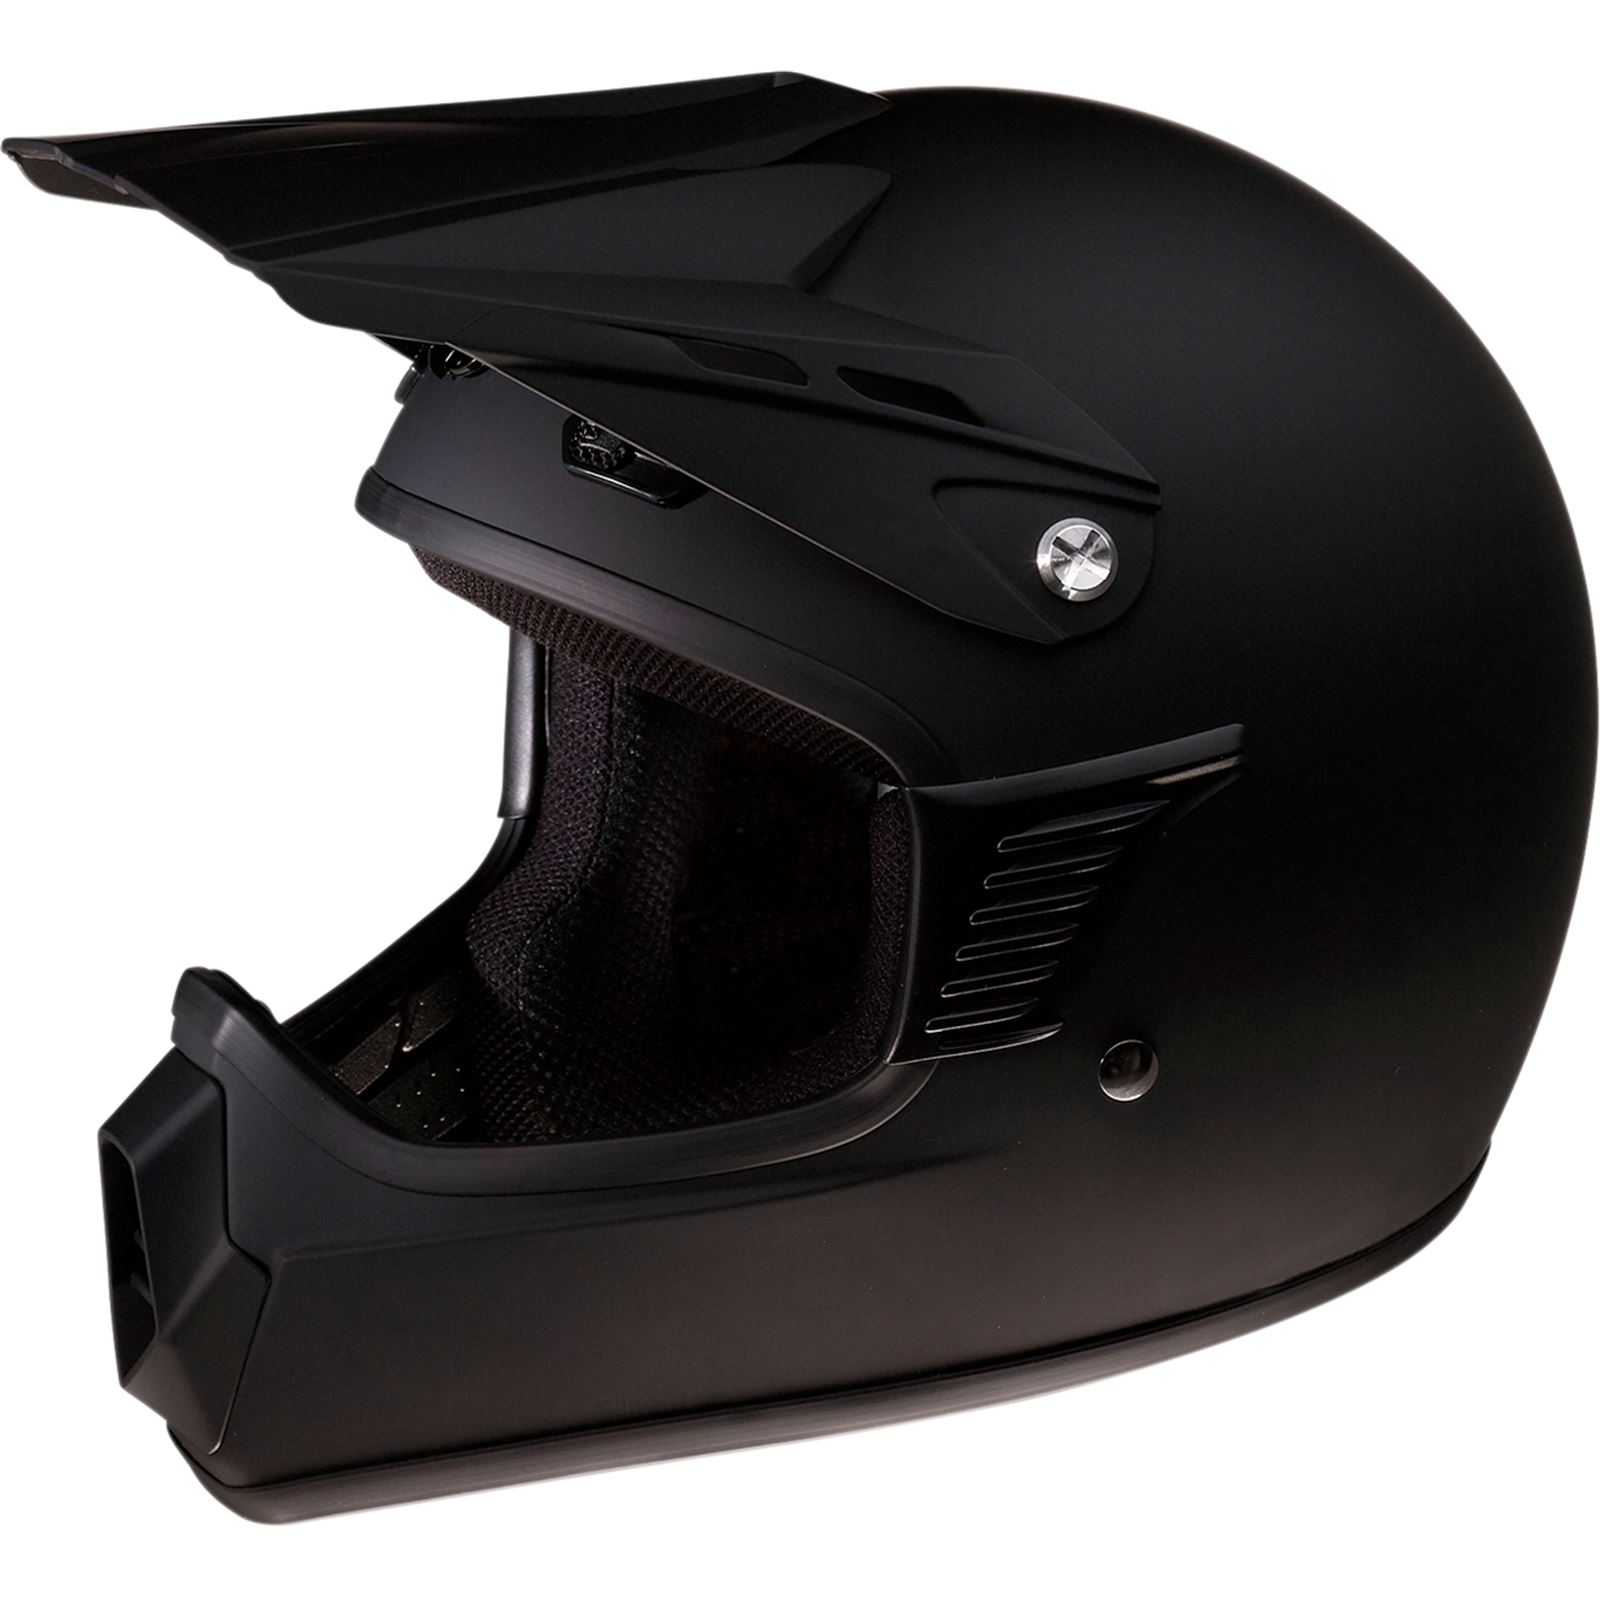 Z1R Child Rise Helmet - Flat Black - Small/Medium